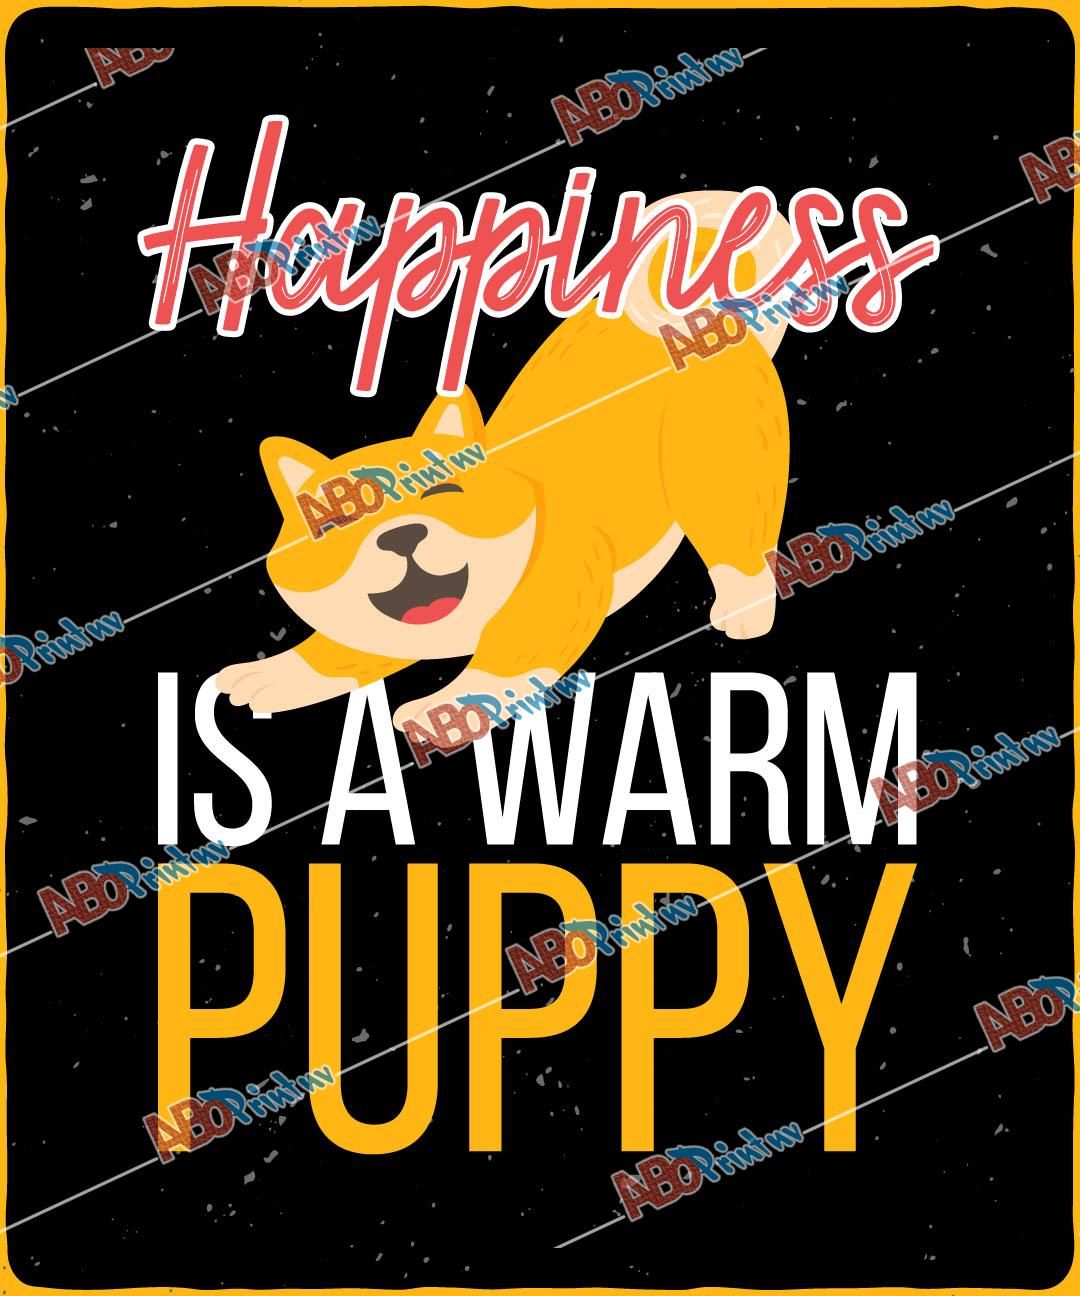 Happiness is a warm puppyJPG (1).jpg